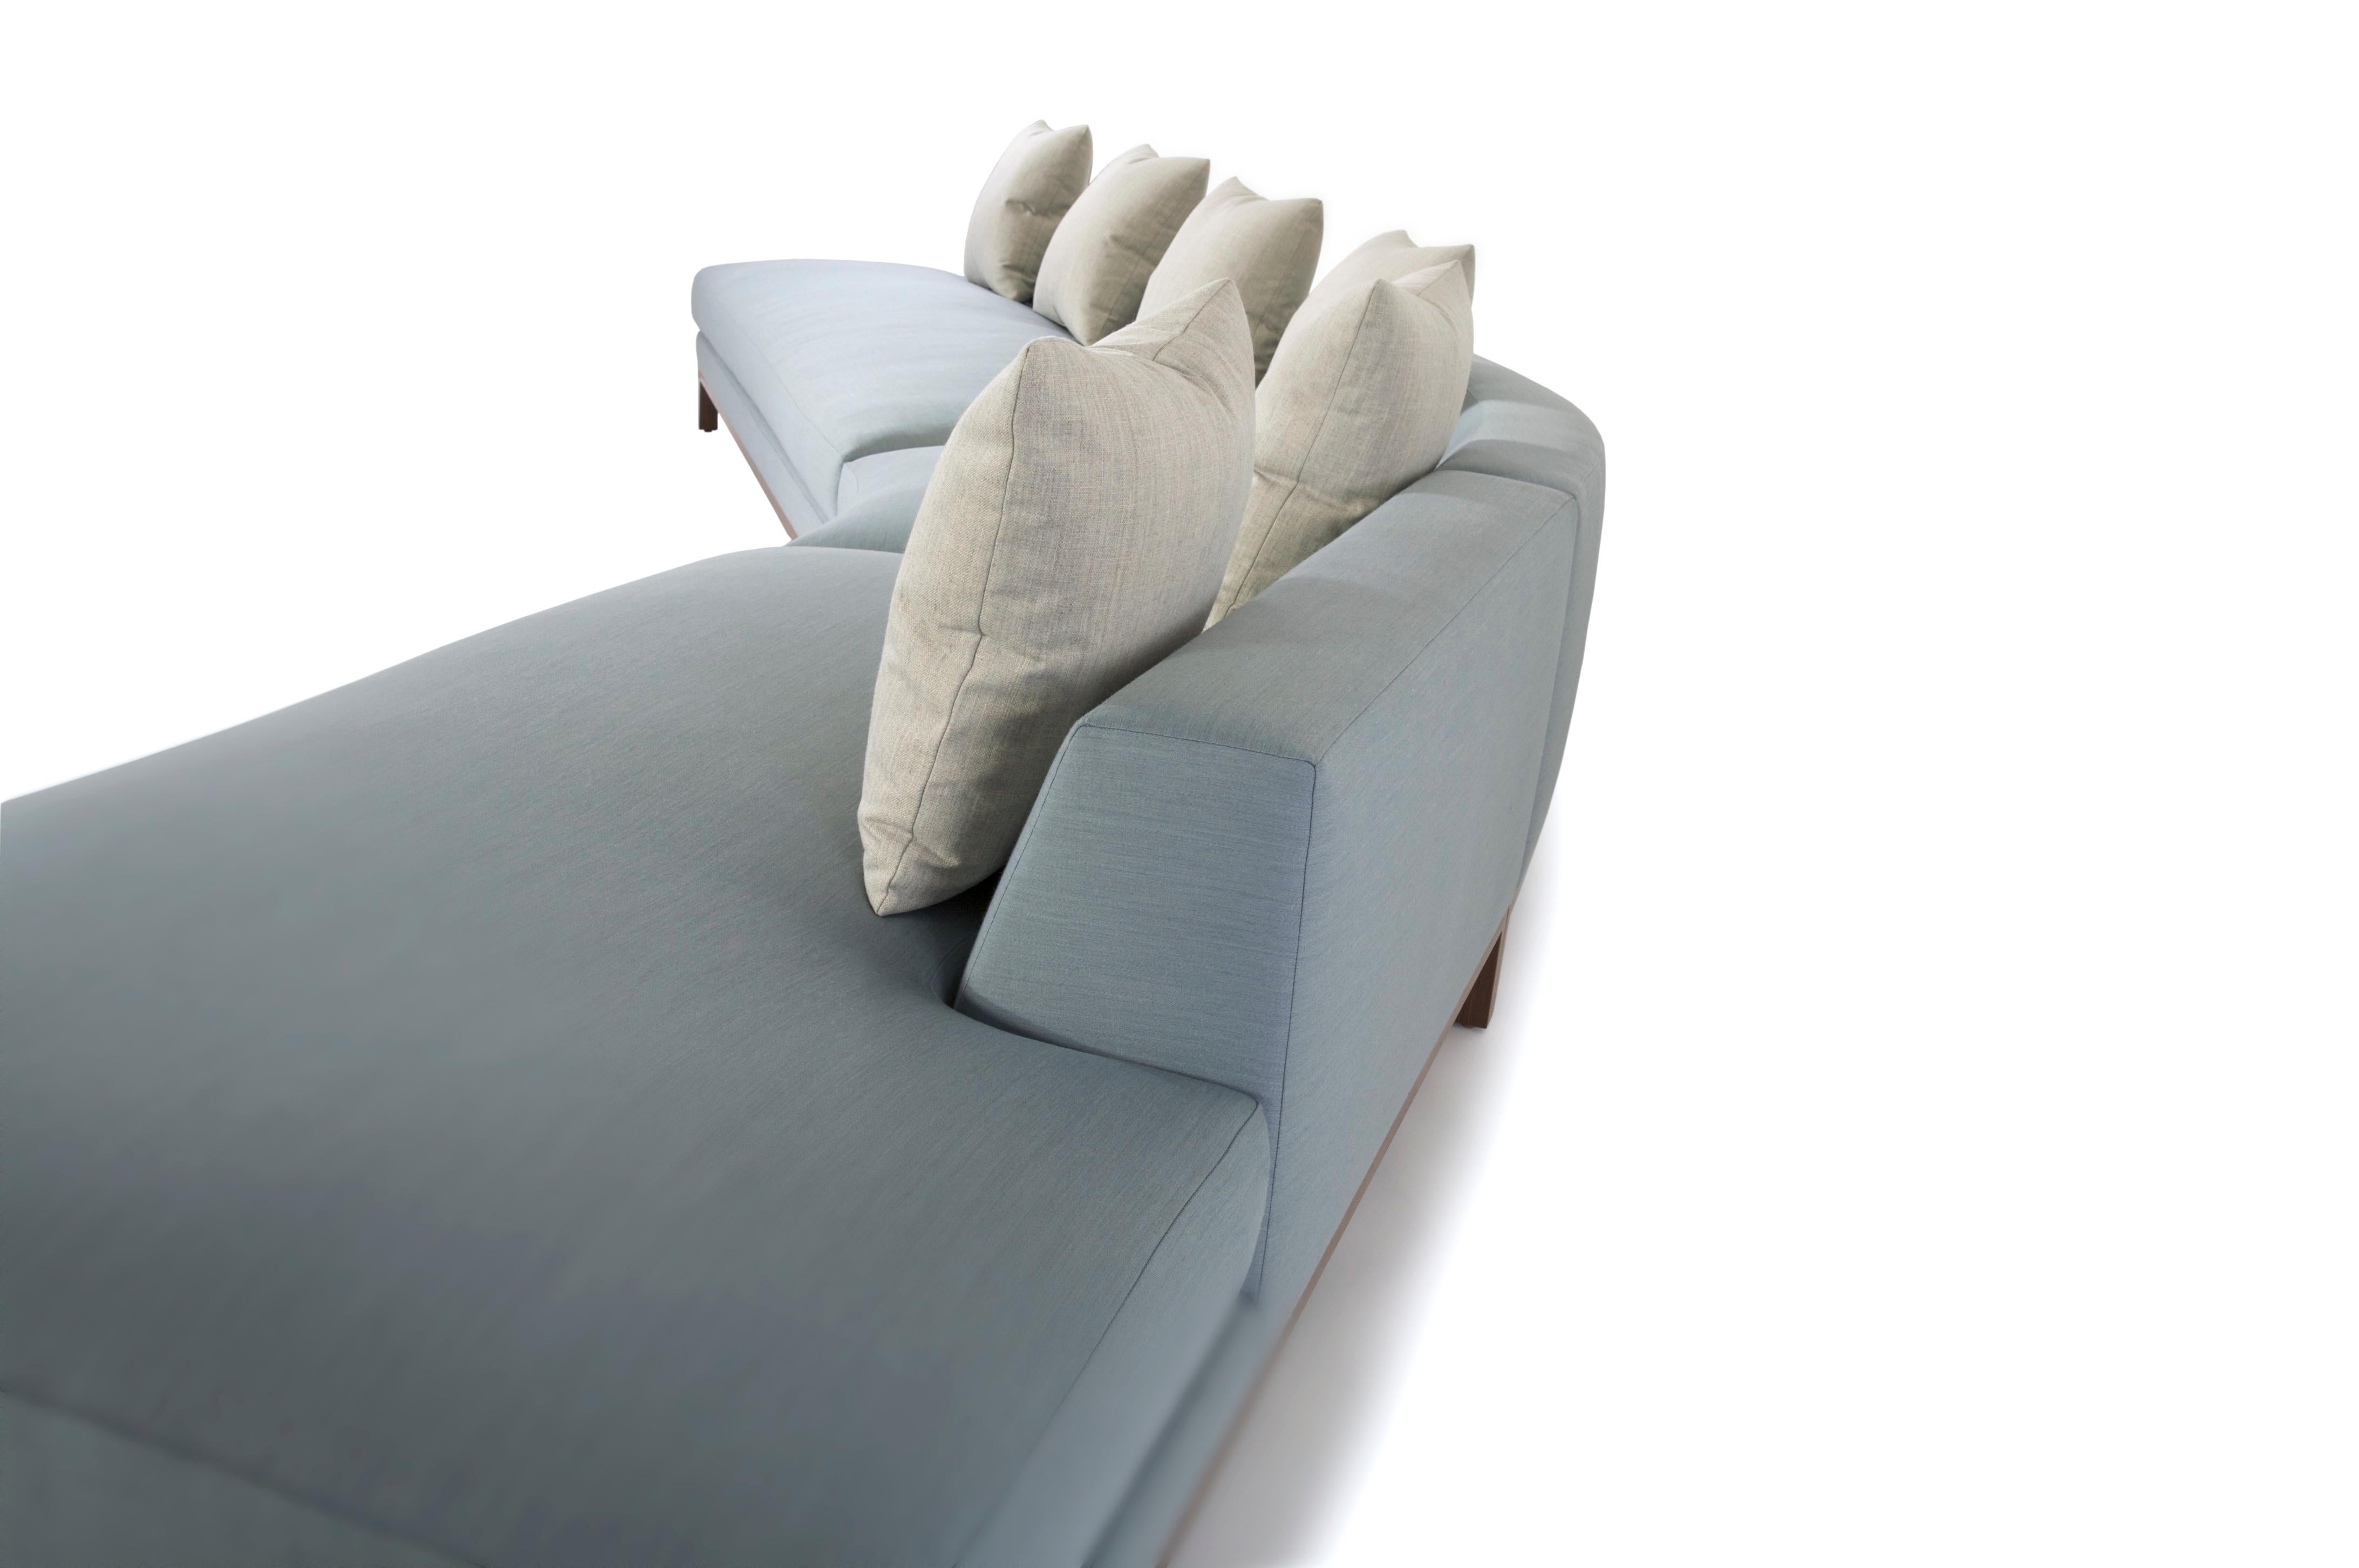 American Loft Sofa curved sofa loose seat cushions sofa walnut legs curved shape      For Sale